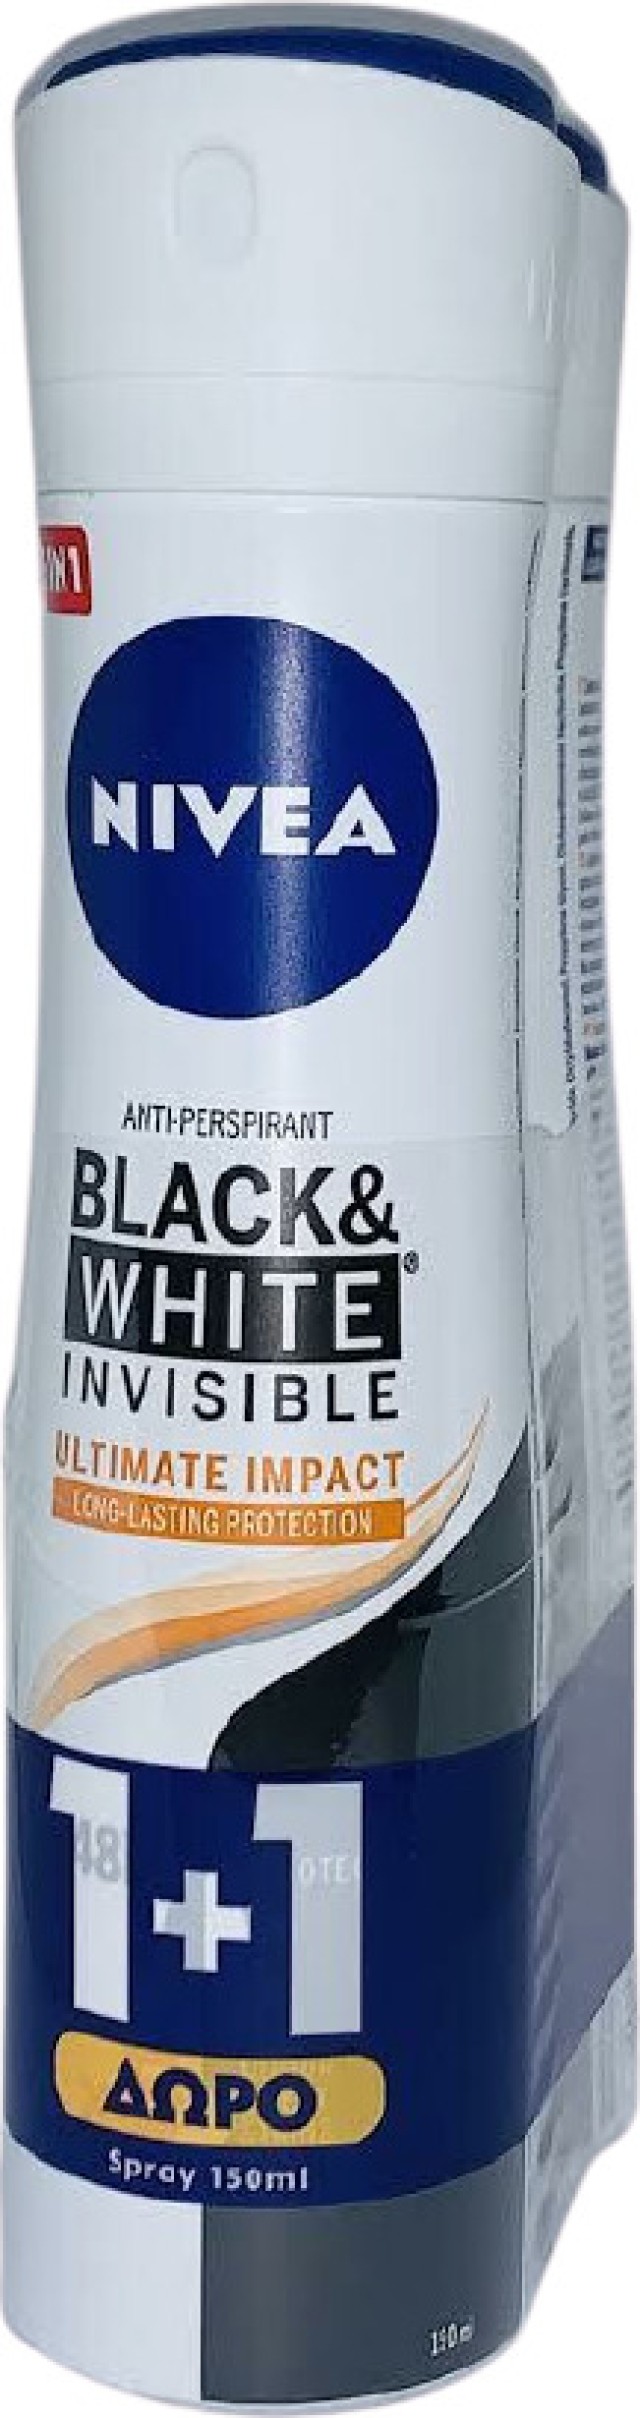 Nivea Promo Αποσμητικό Γυναικείο Spray 48h Προστασίας Deodorant Spray Black & White Invisible Ultimate Impact Long Lasting Protection 2x150ml 1+1 ΔΩΡΟ